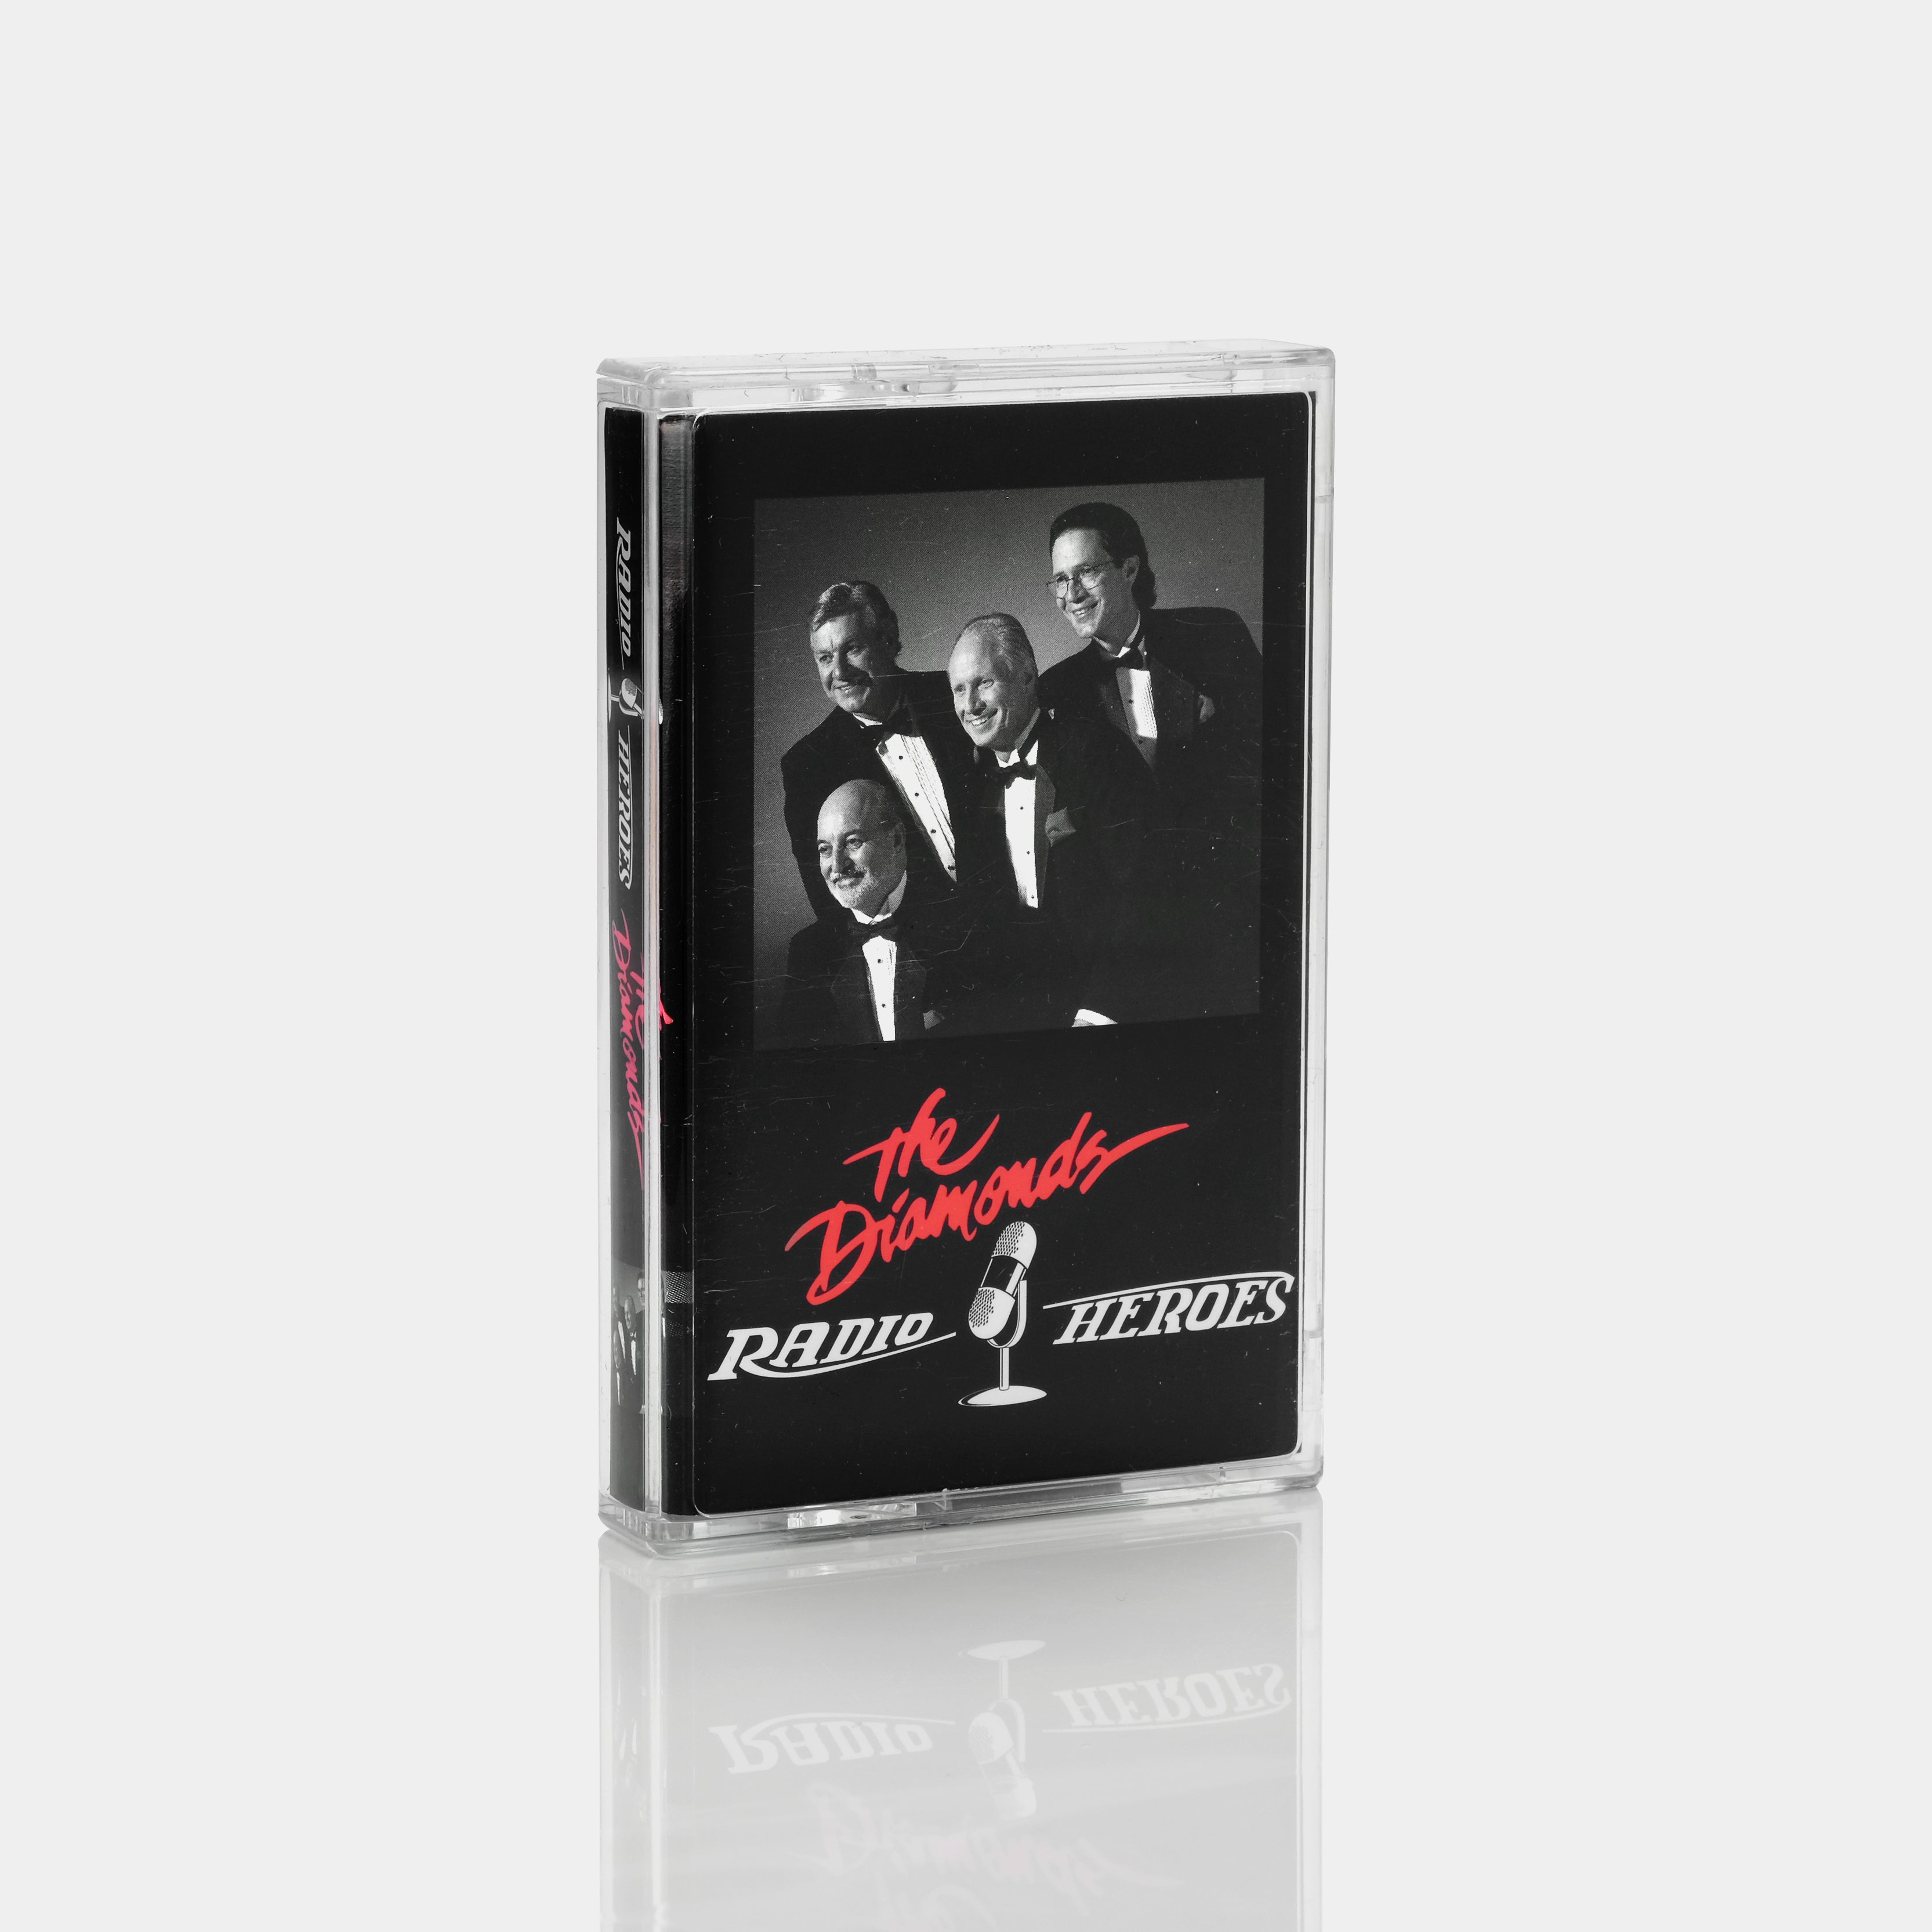 The Diamonds - Radio Heroes Cassette Tape